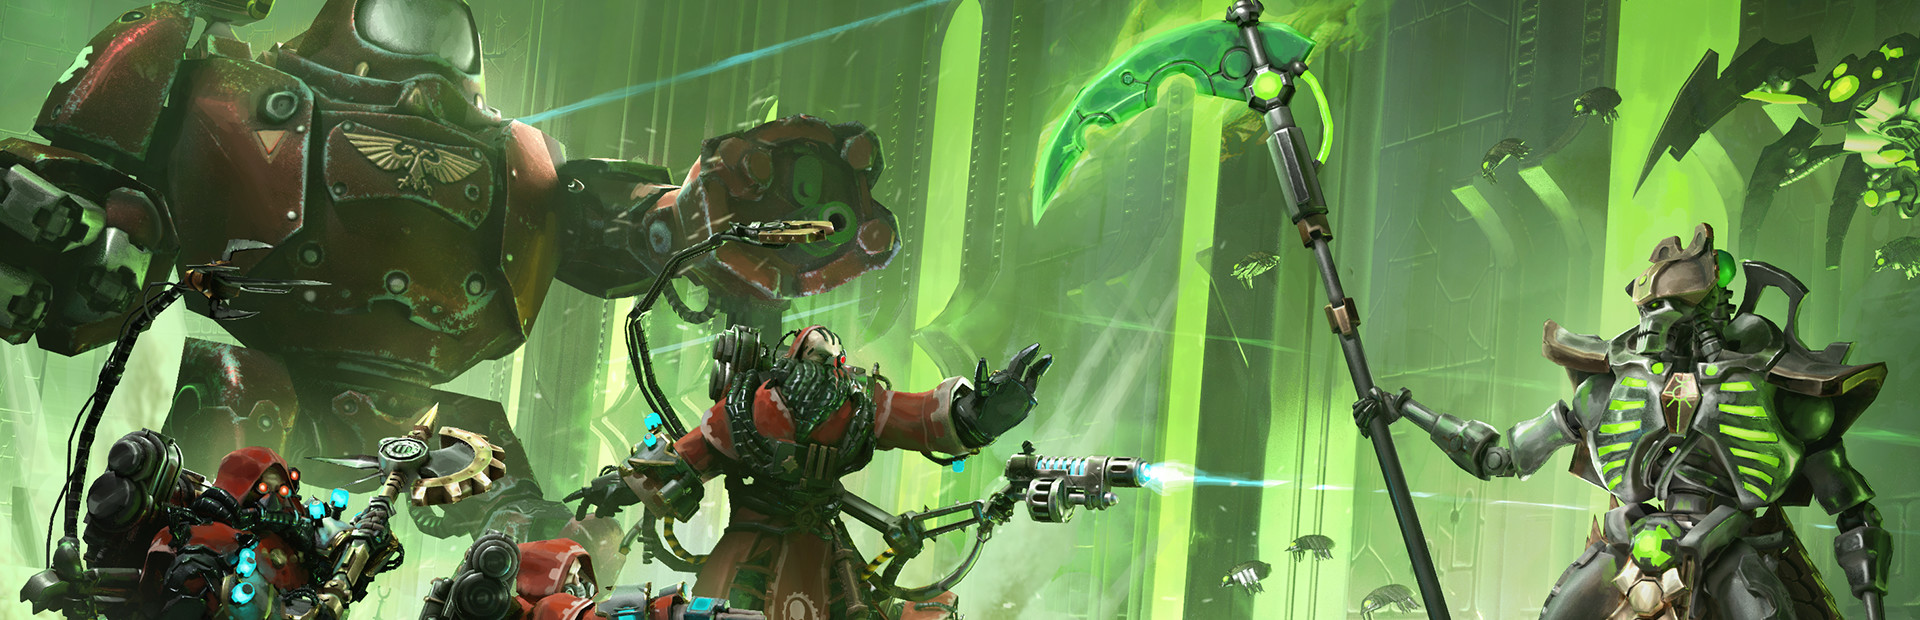 Warhammer 40,000: Mechanicus cover image